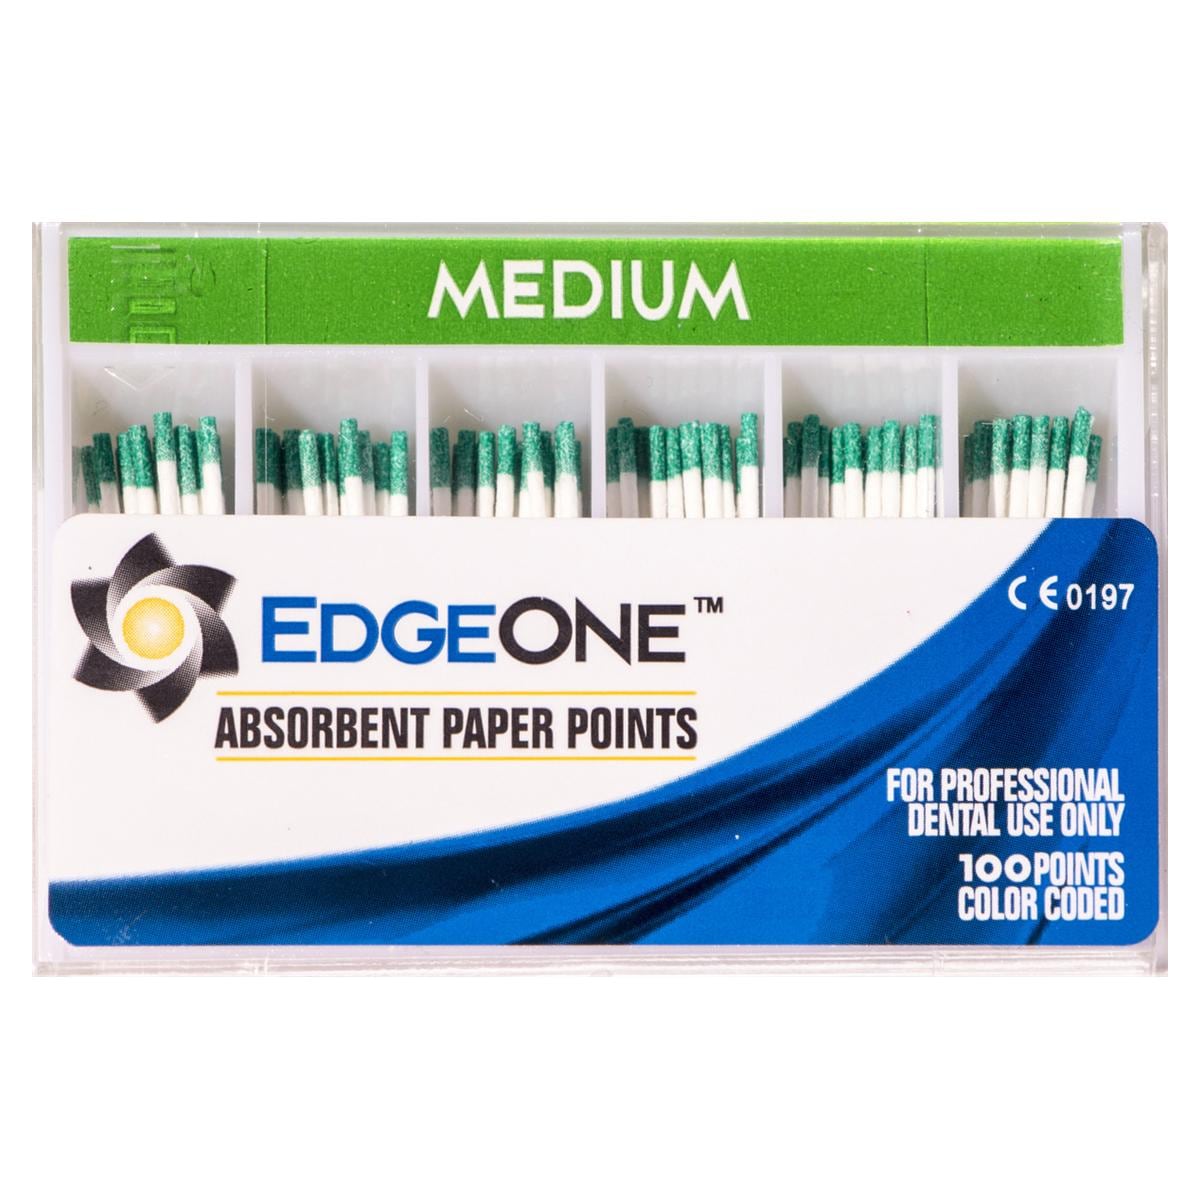 Pointes en papier absorbant EdgeOne - Medium (vert), 100 pcs